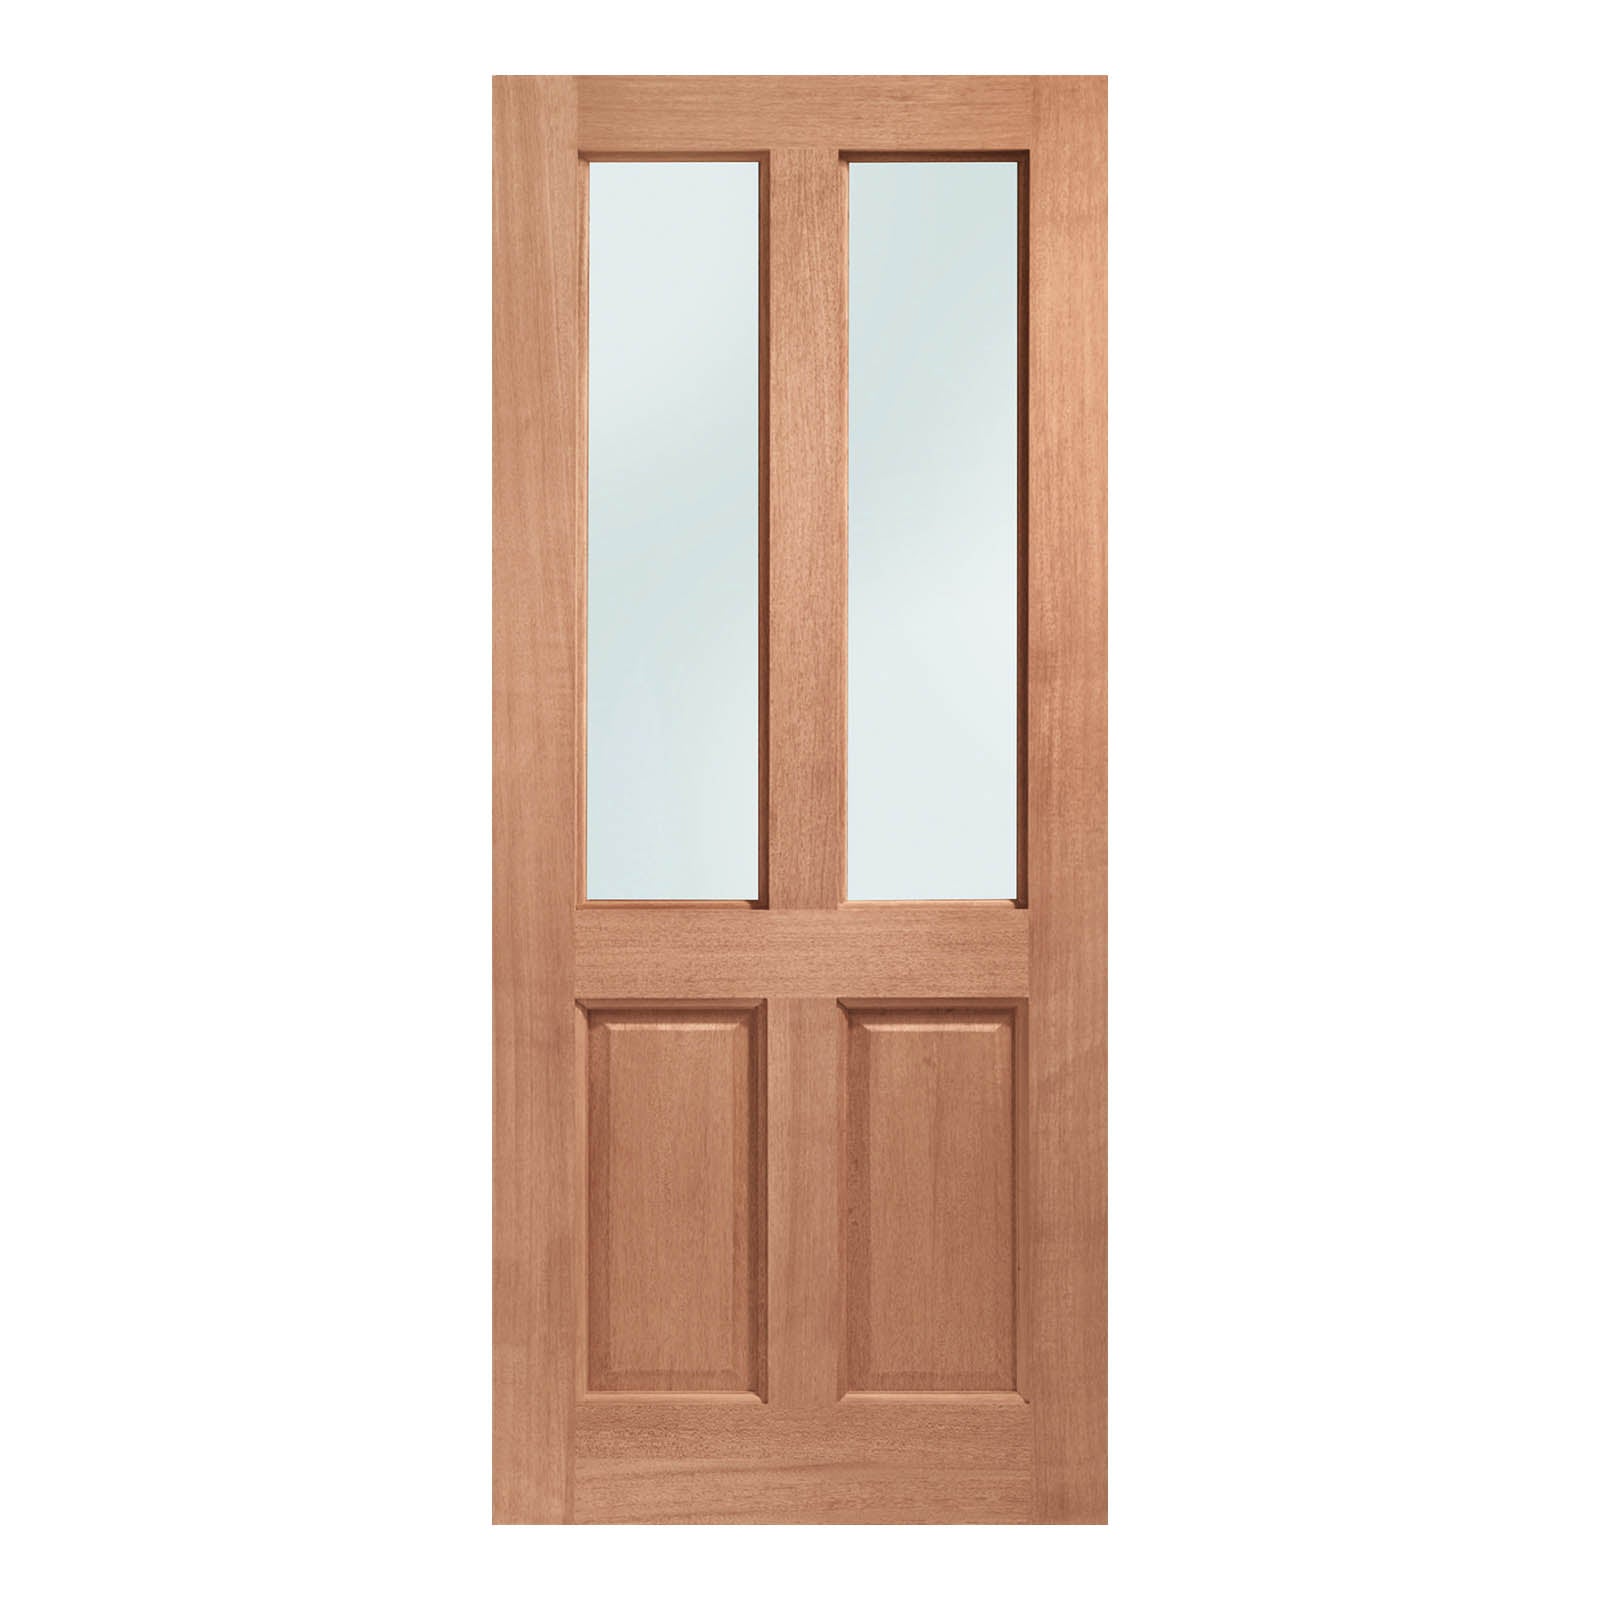 External Hardwood Malton Door with Double Glazed Obscure Glass